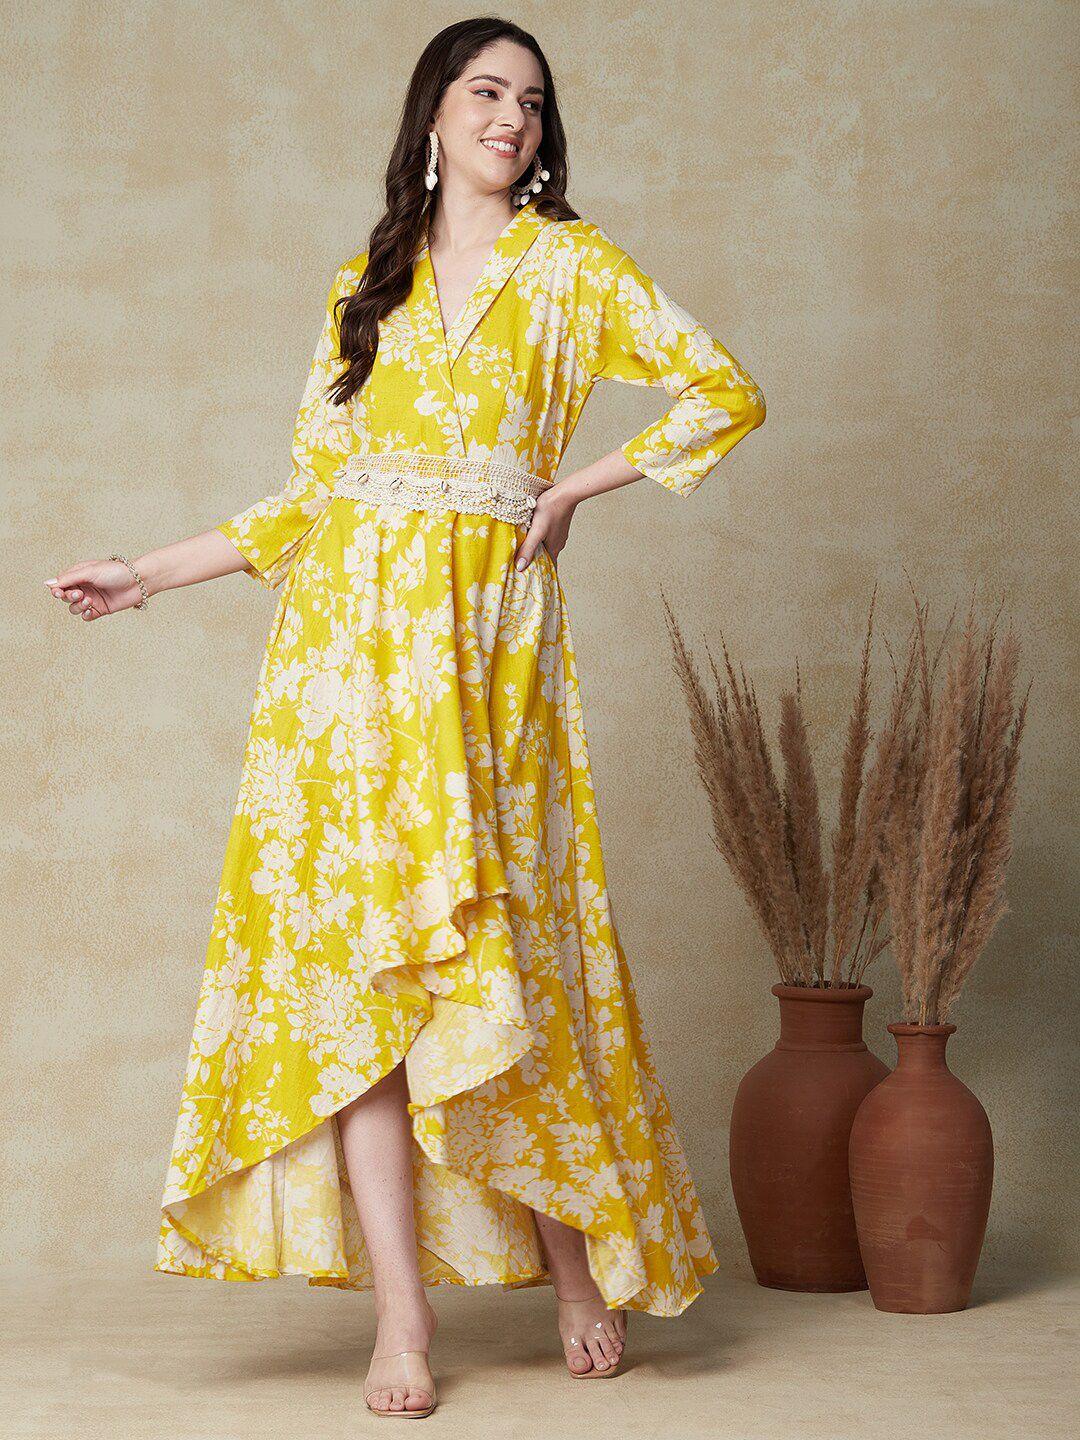 envy me by fashor yellow floral print crepe maxi dress